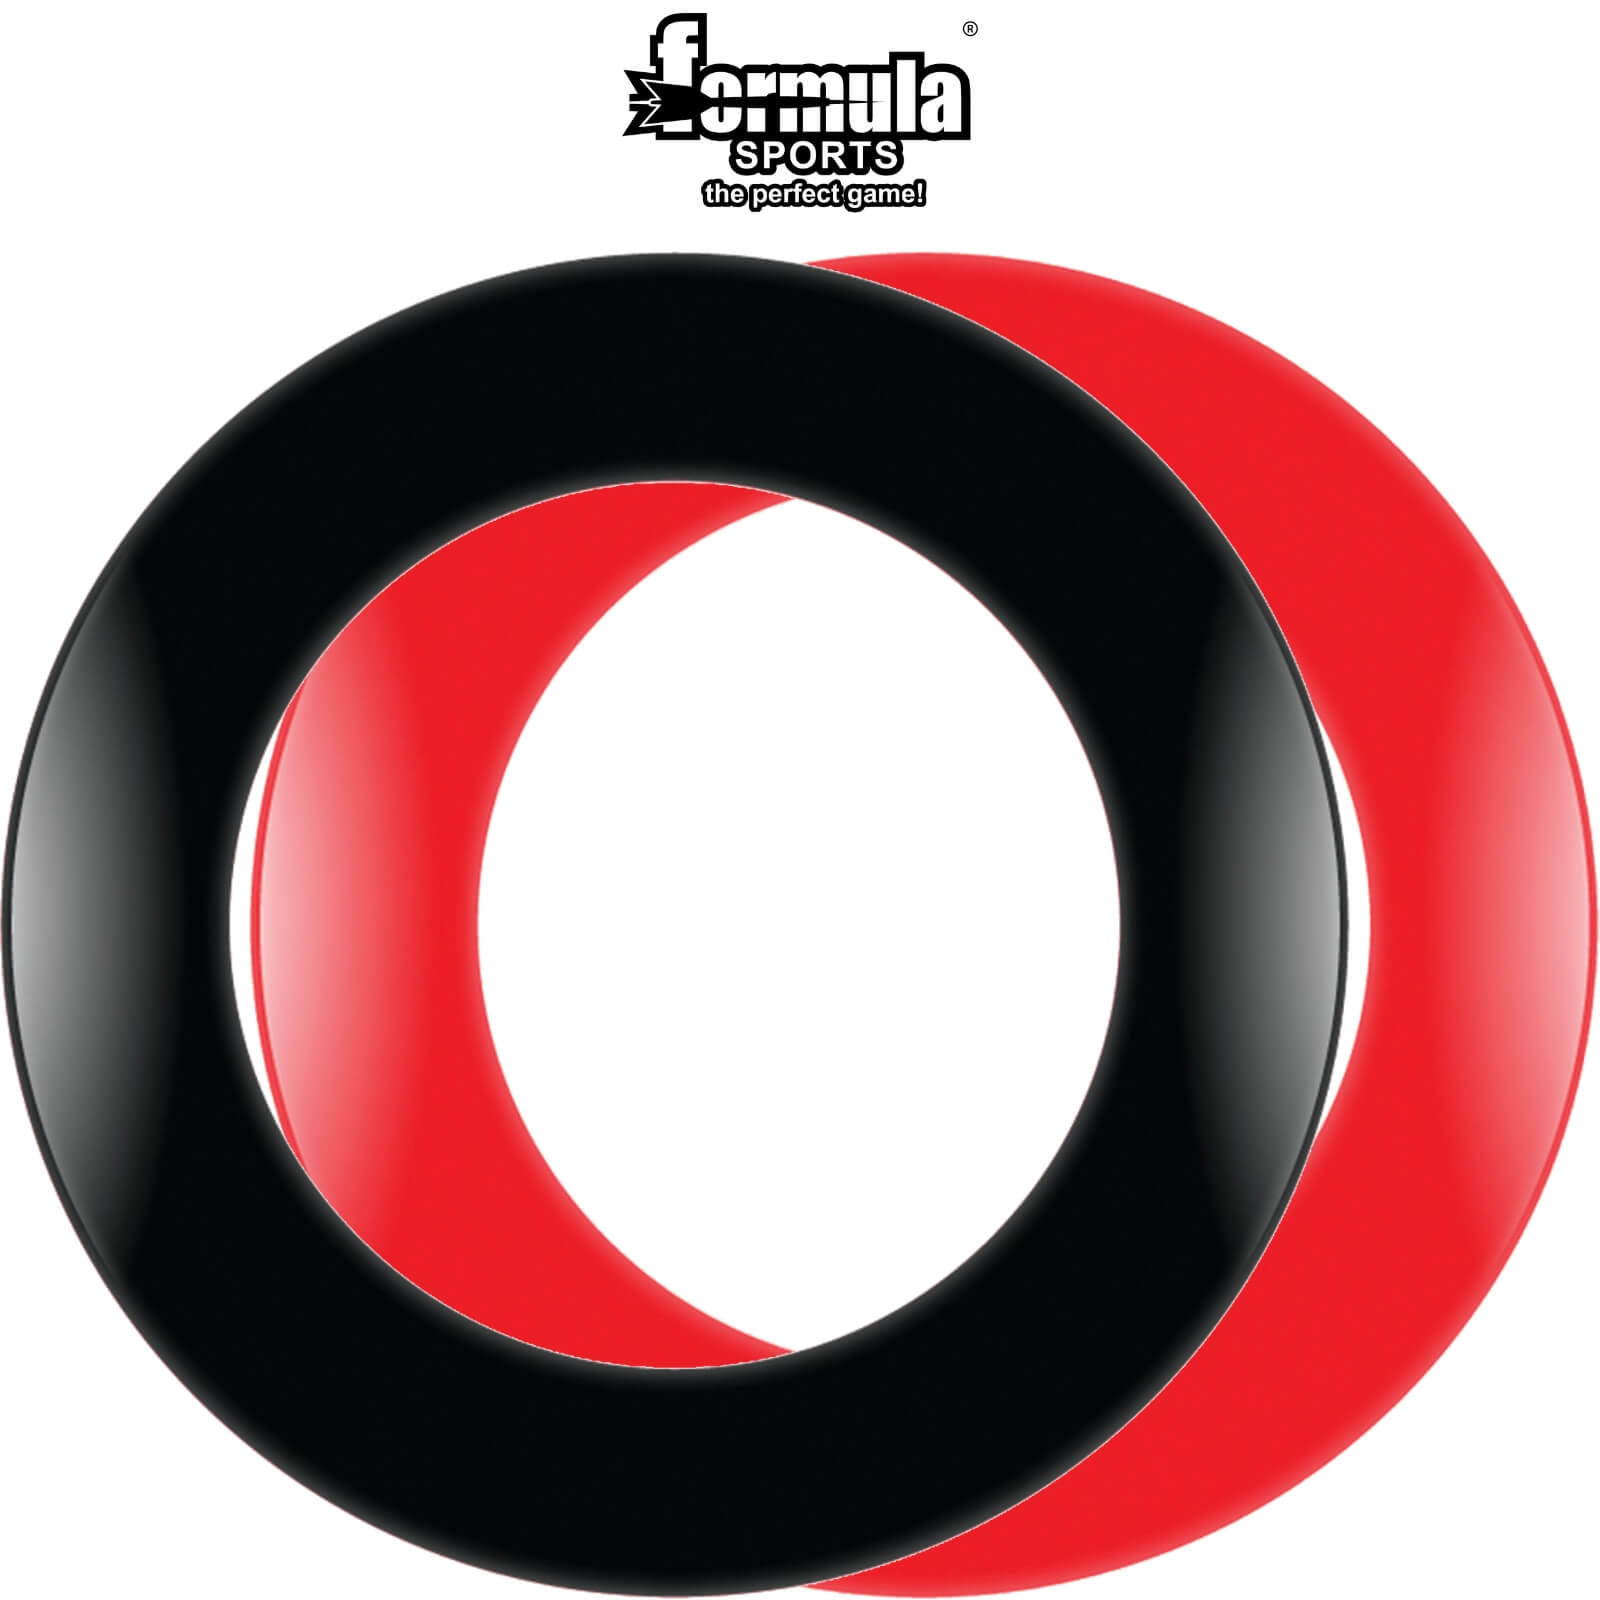 Dartboard Accessories - Formula Sports - 1 Piece Dartboard Surround - Black Red 